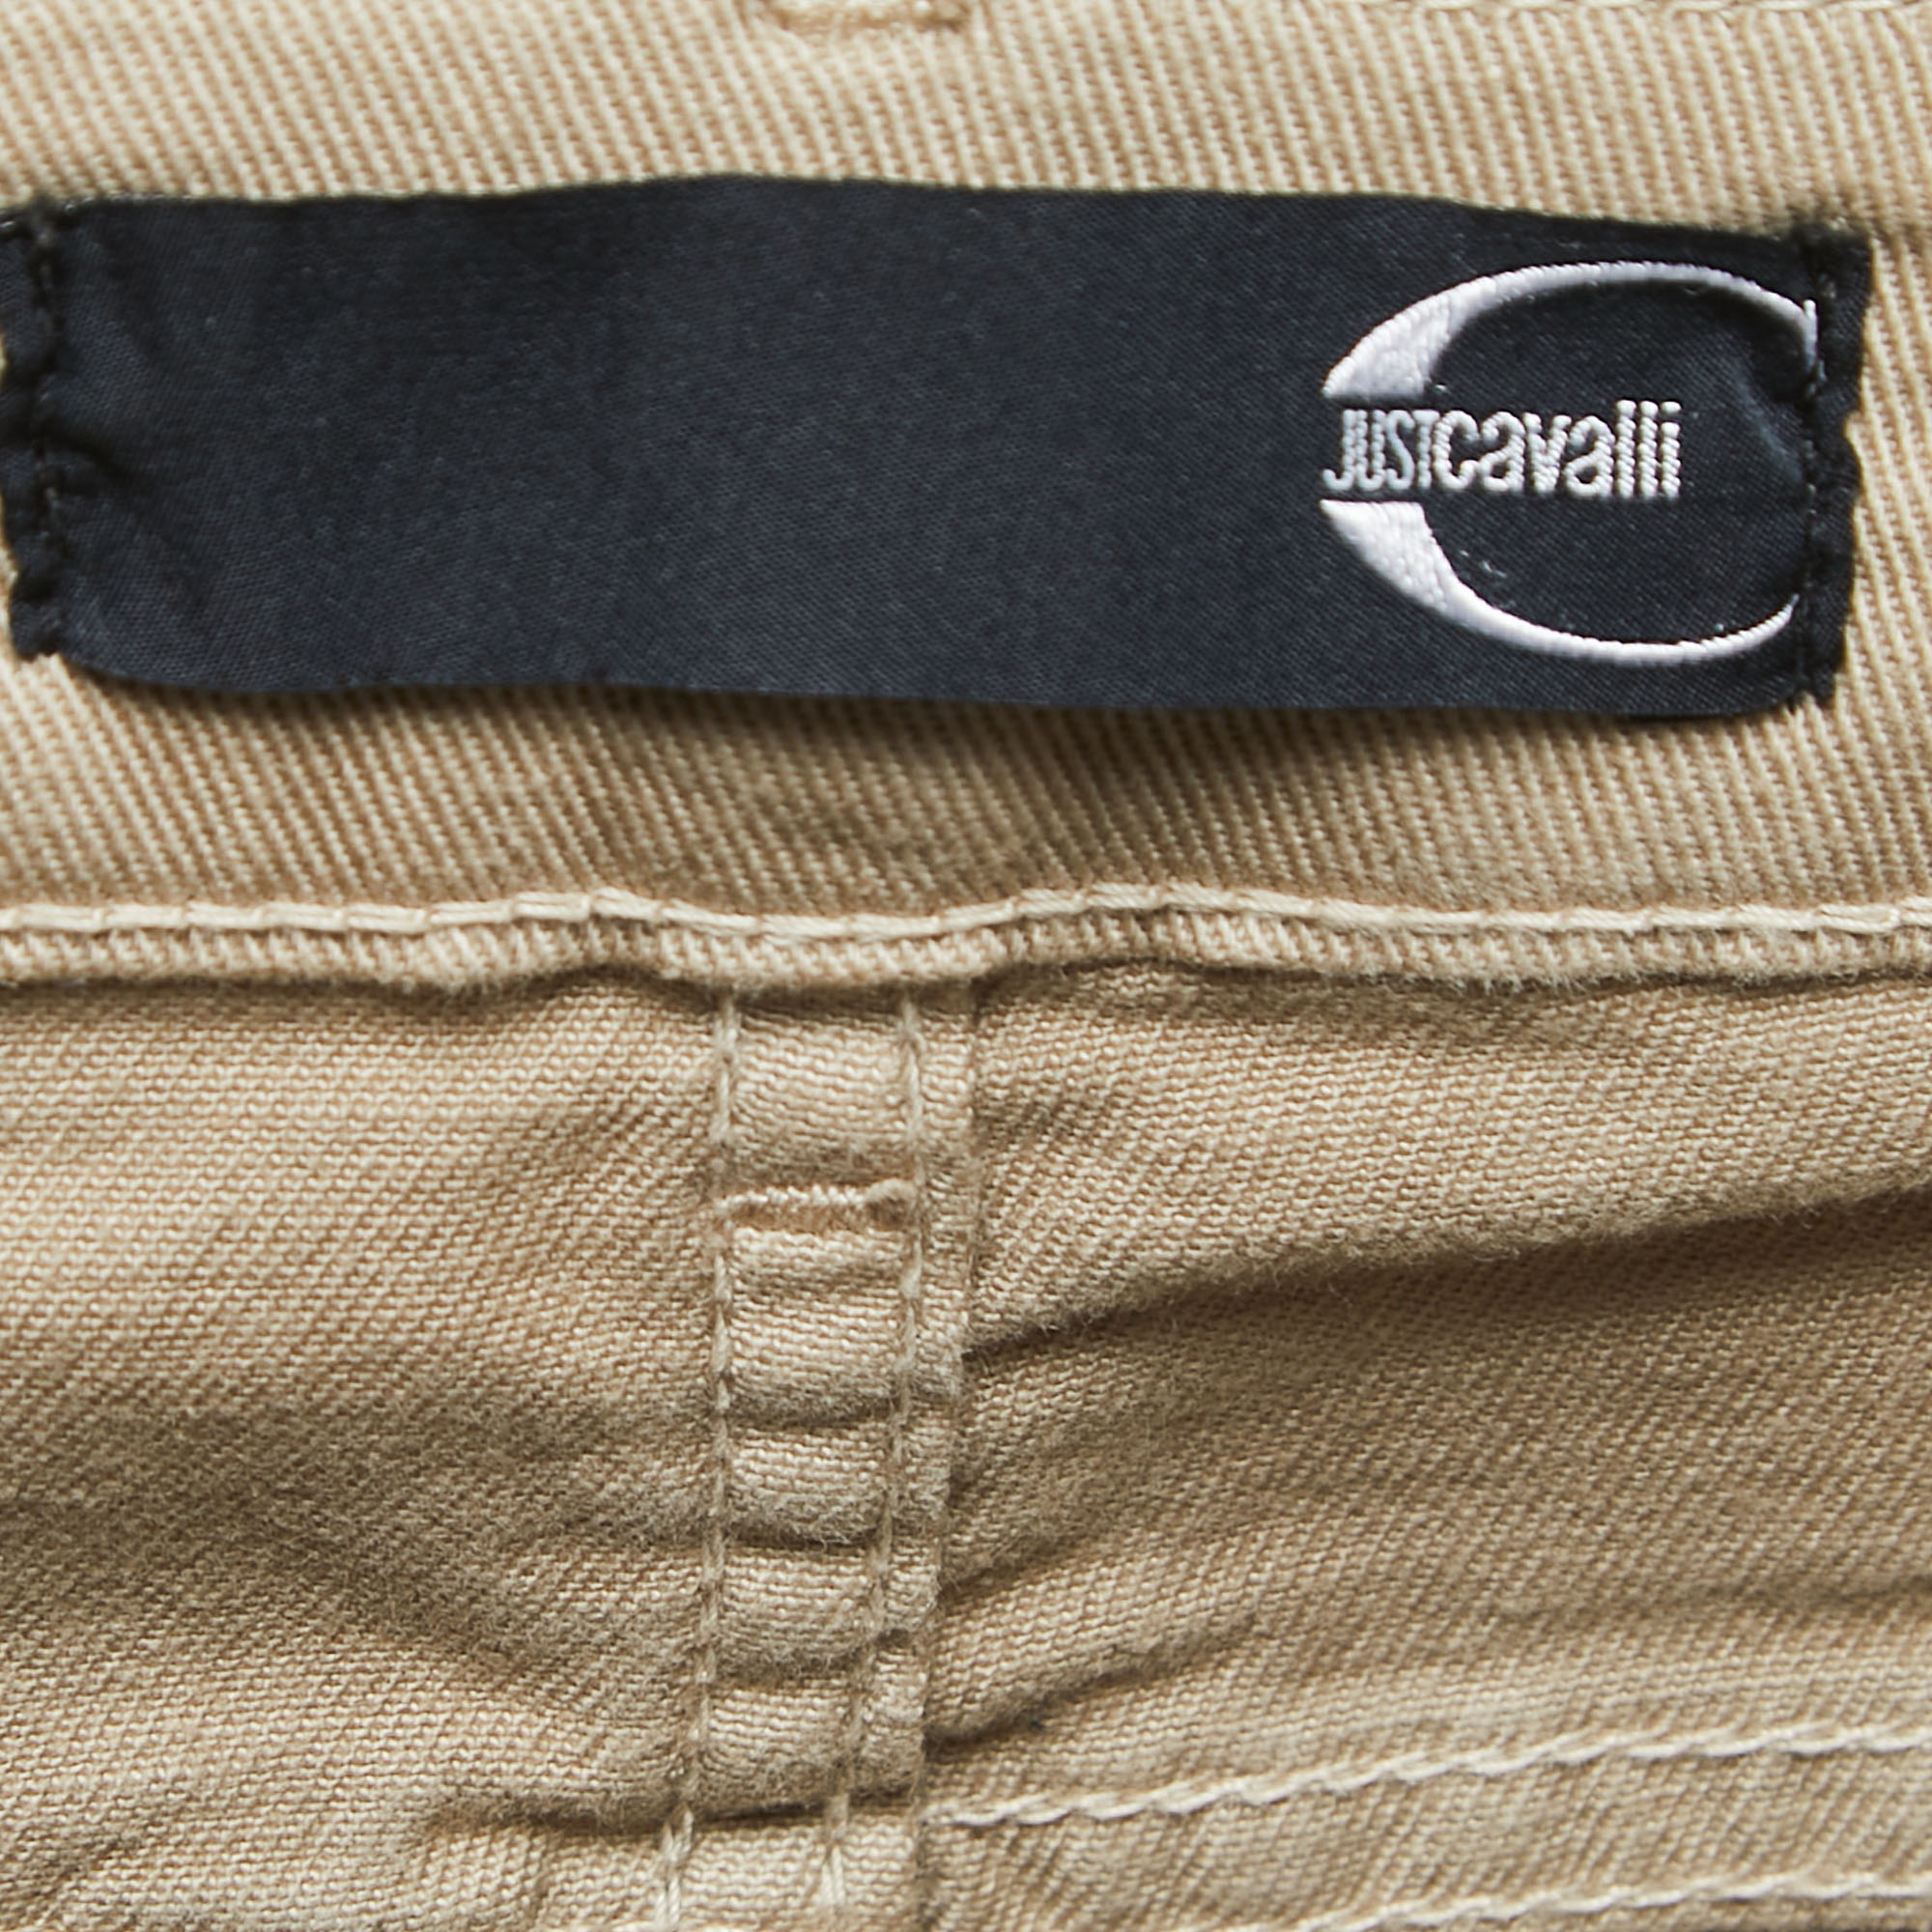 Just Cavalli Beige Cotton Skinny Cigarette Jeans M Waist 28